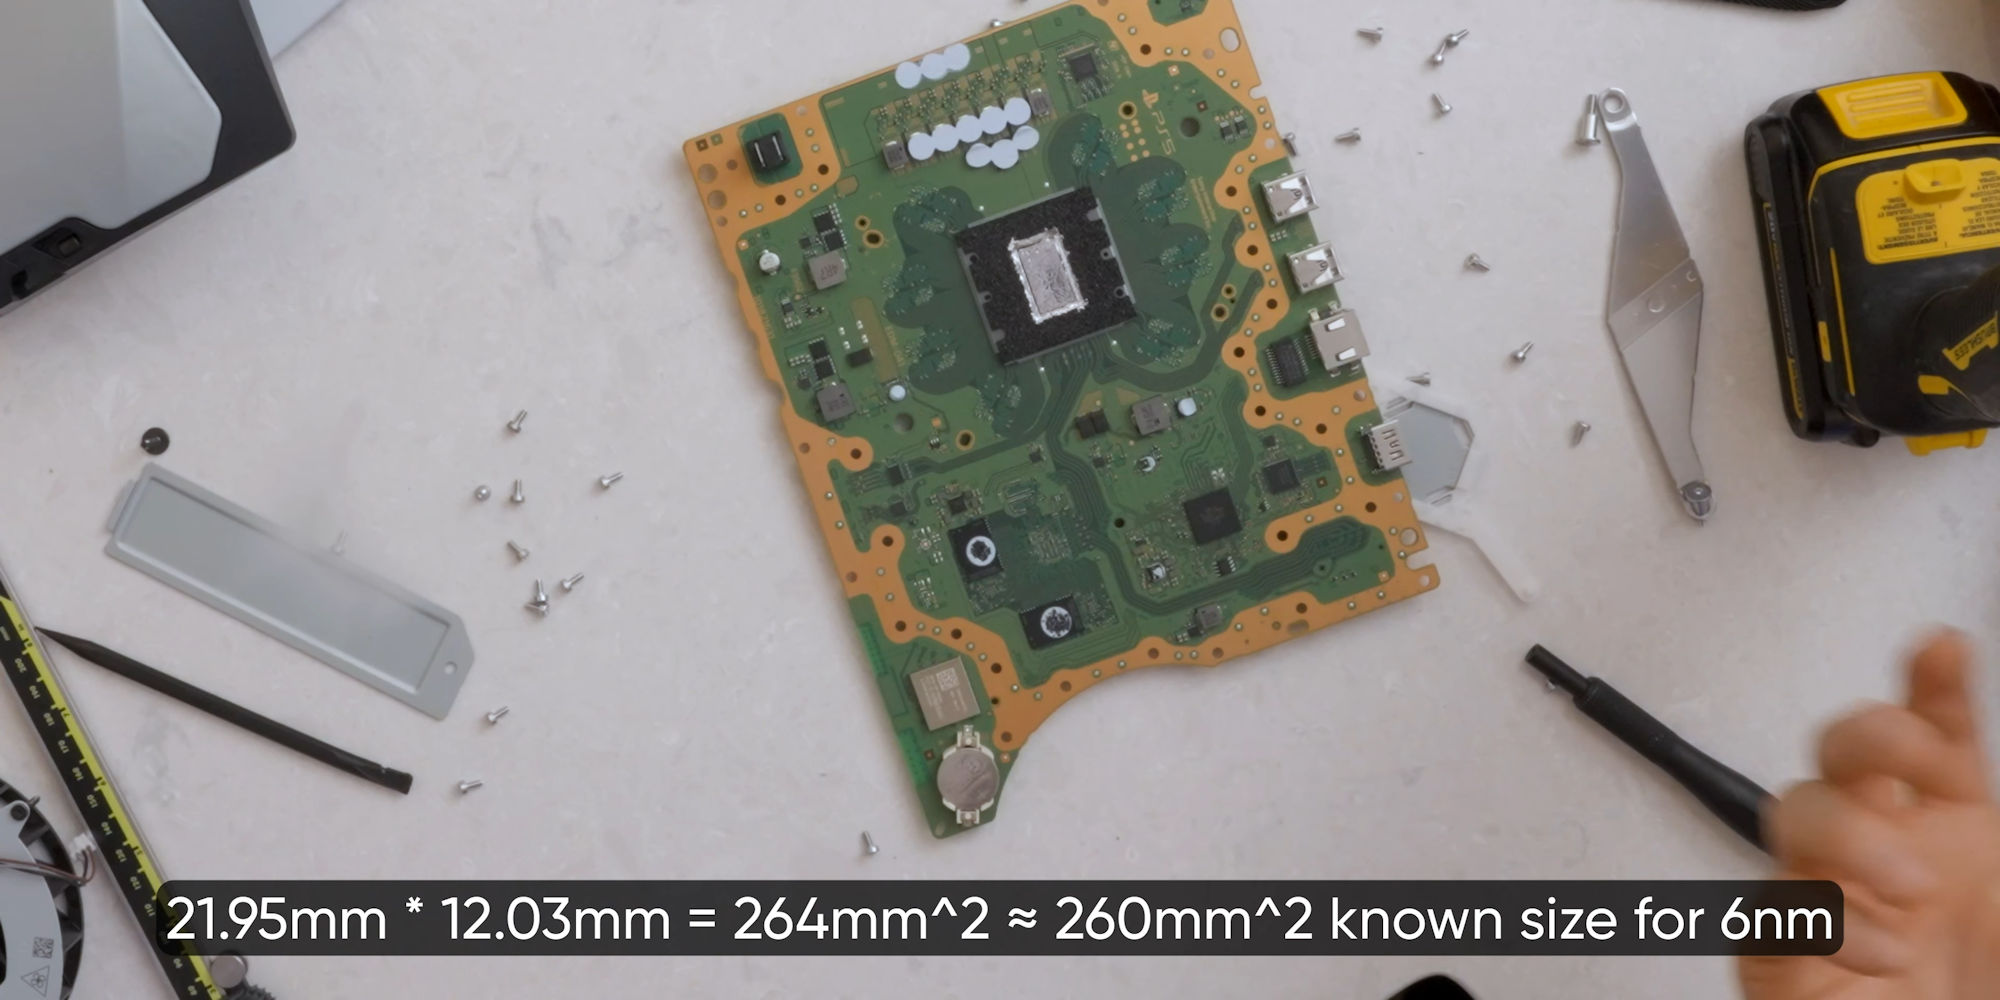 PS5 Slim: Release Date, Chipset Specs, Design, Other Details Leaked